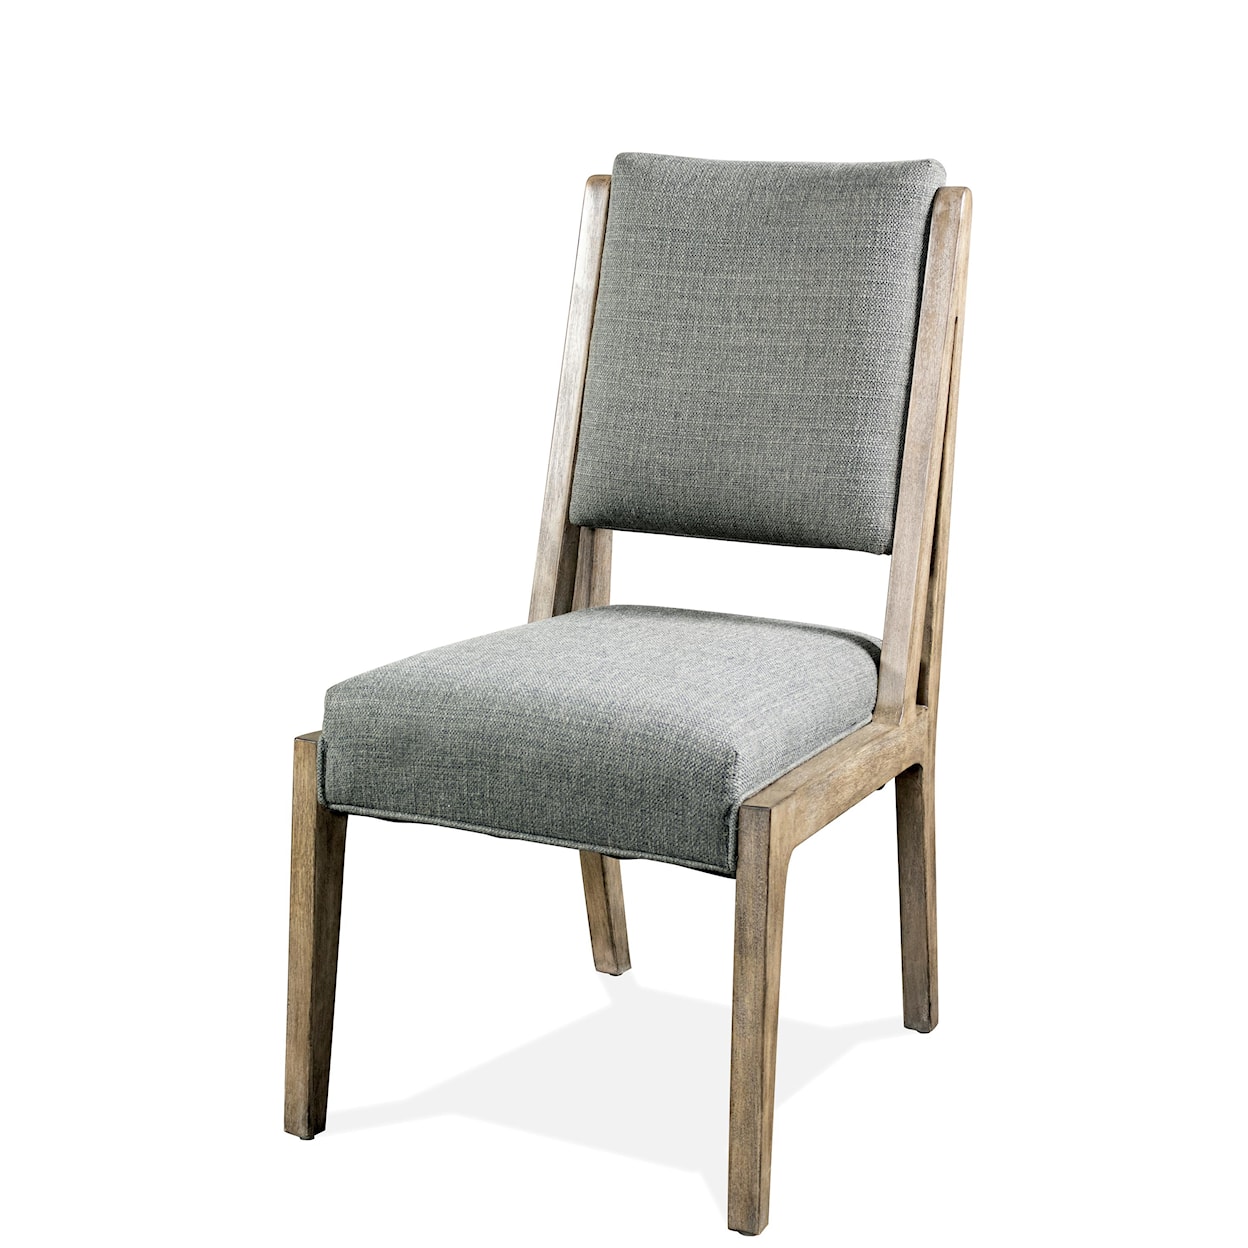 Riverside Furniture Milton Park Upholstered Side Chair